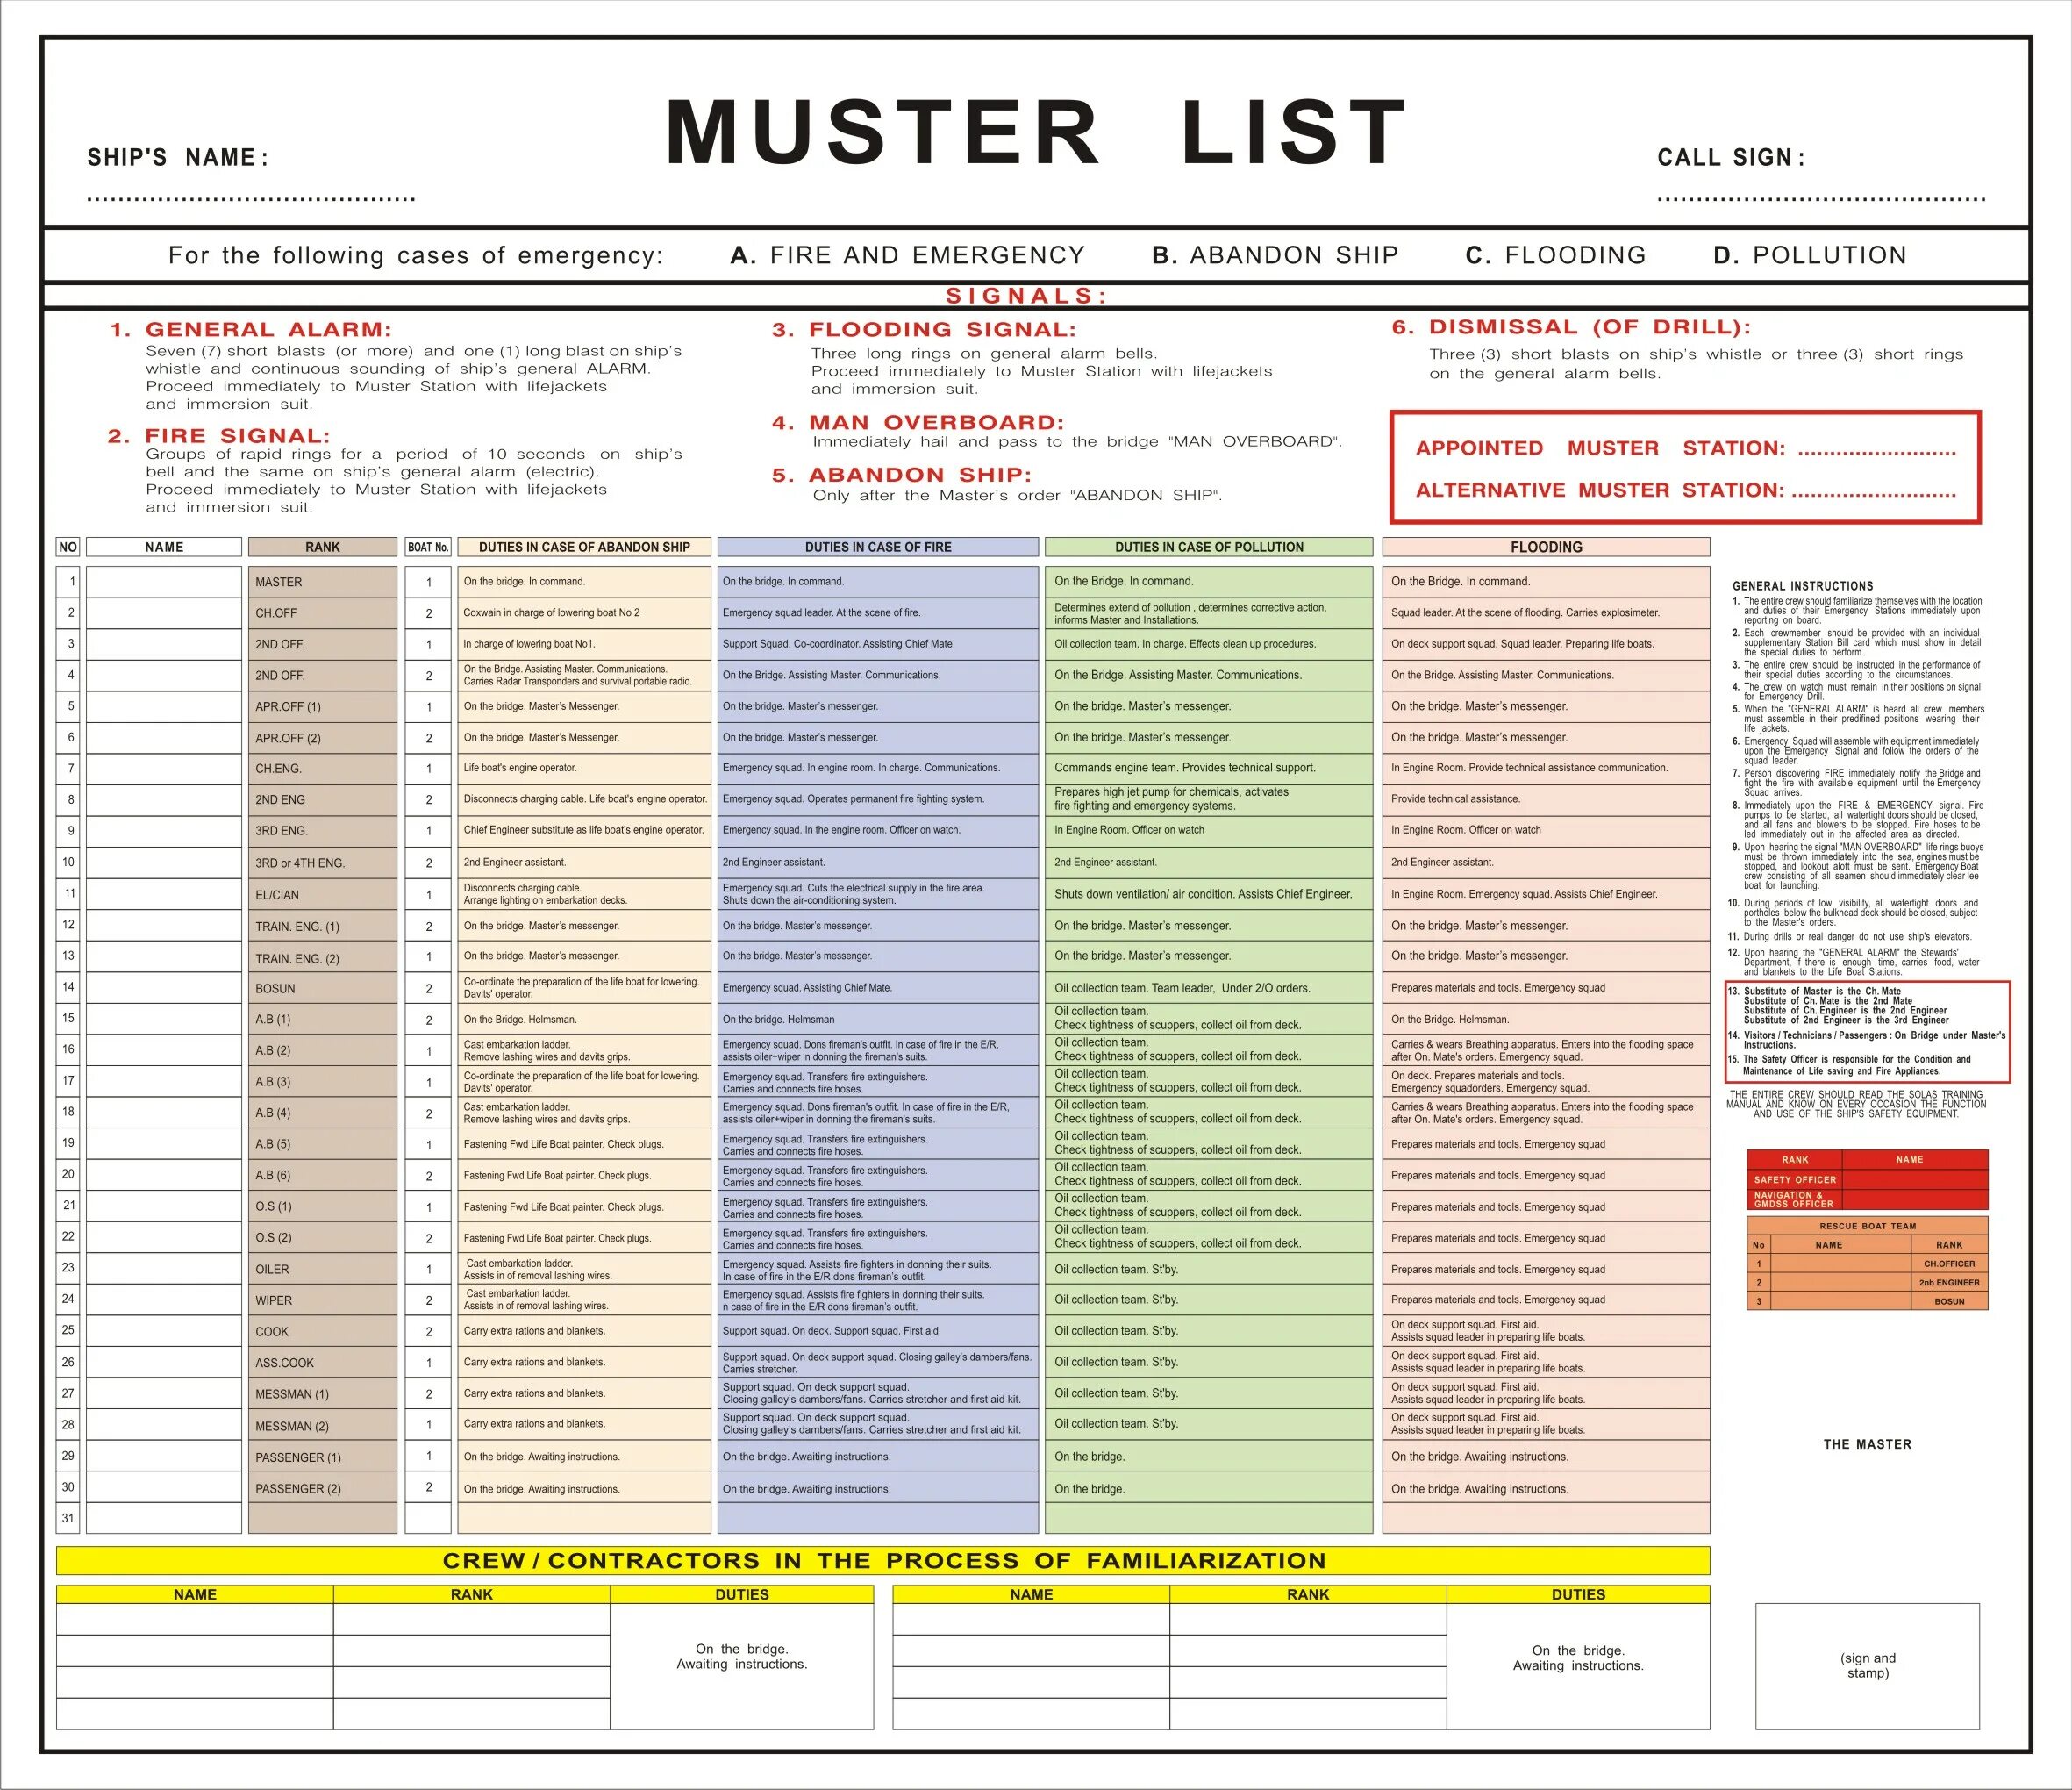 Muster list. Master list на судне. Muster list расписание по тревогам. Muster list on ship.